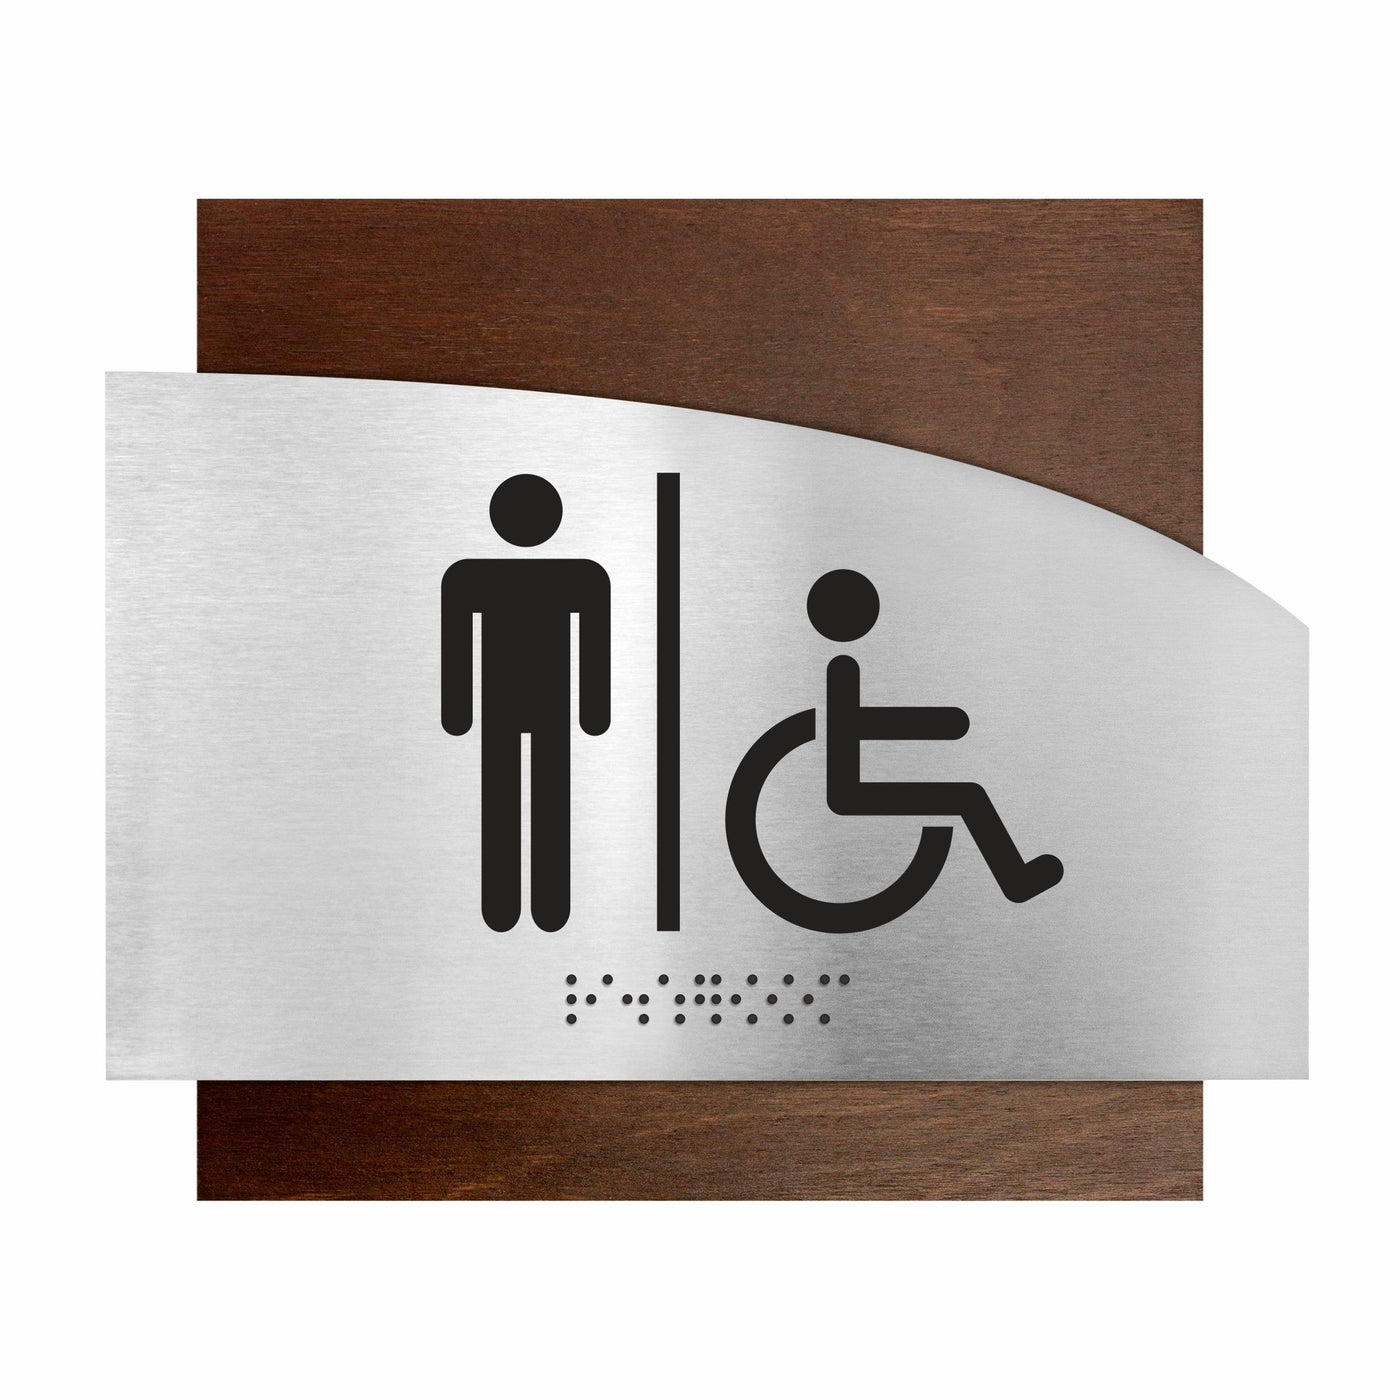 Men & Wheelchair Bathroom Sign - "Wave" Design